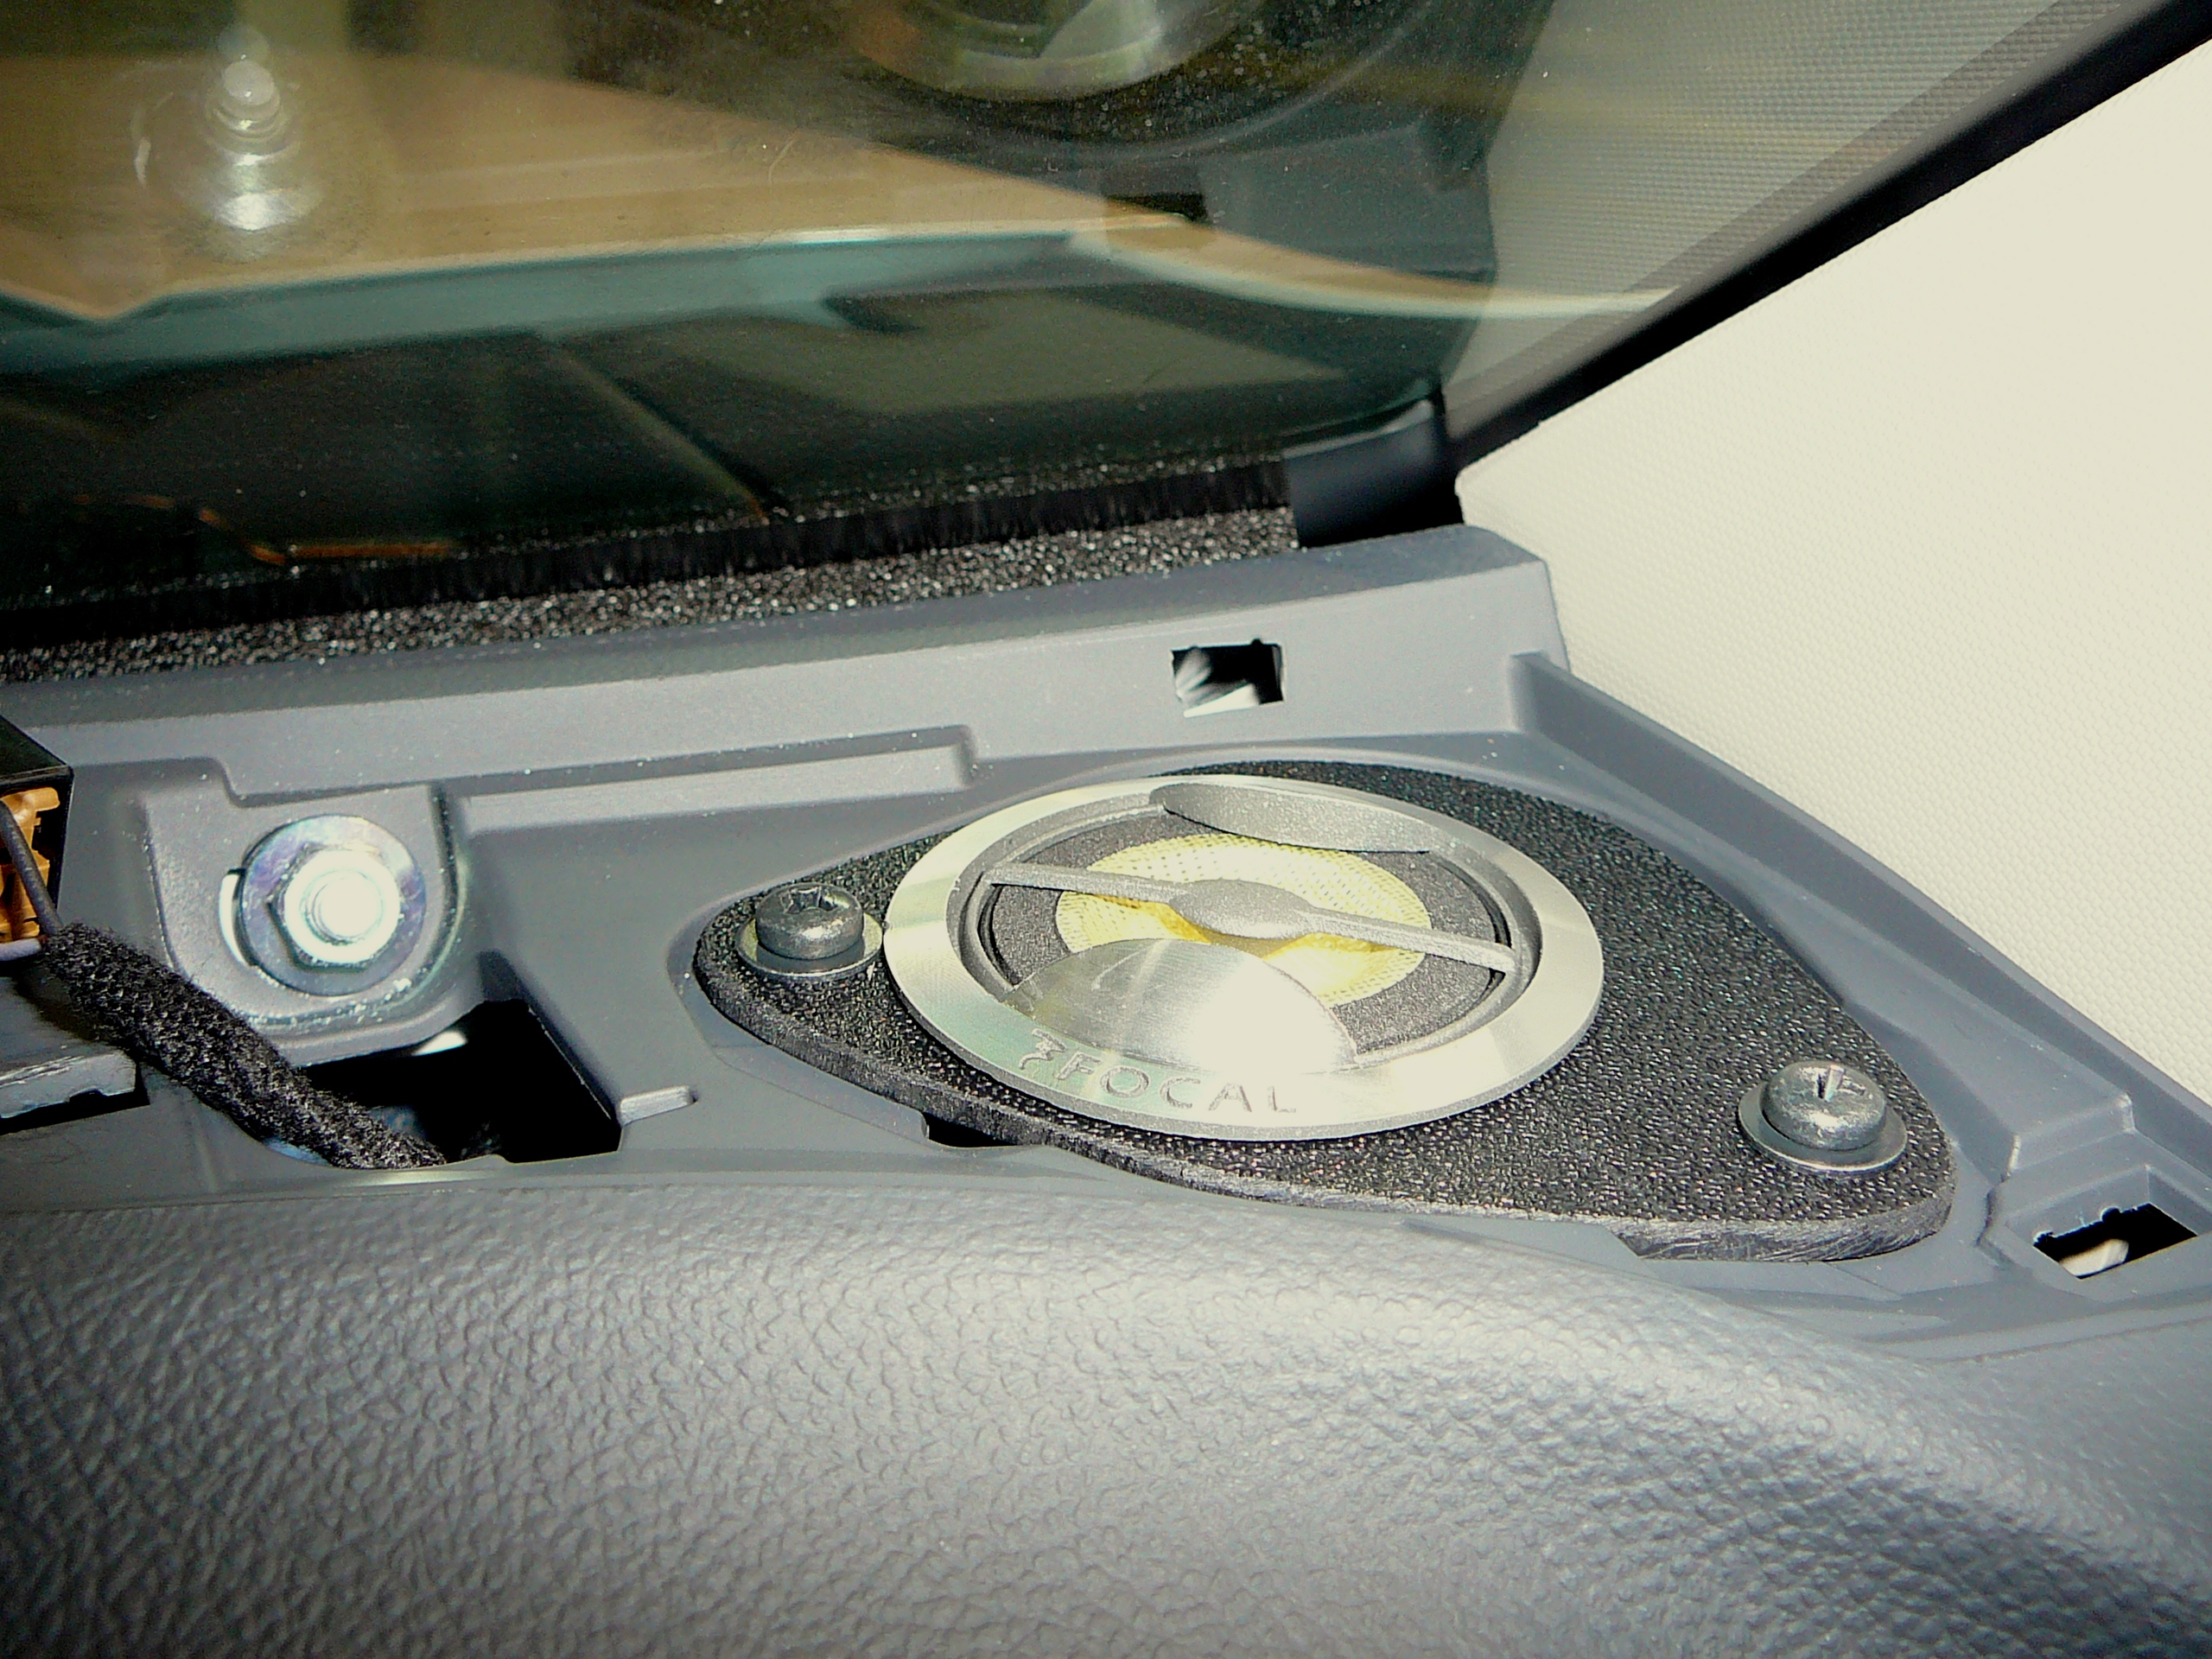 Holden Colorado 2012, Navigation & Reverse Camera, Focal Speakers